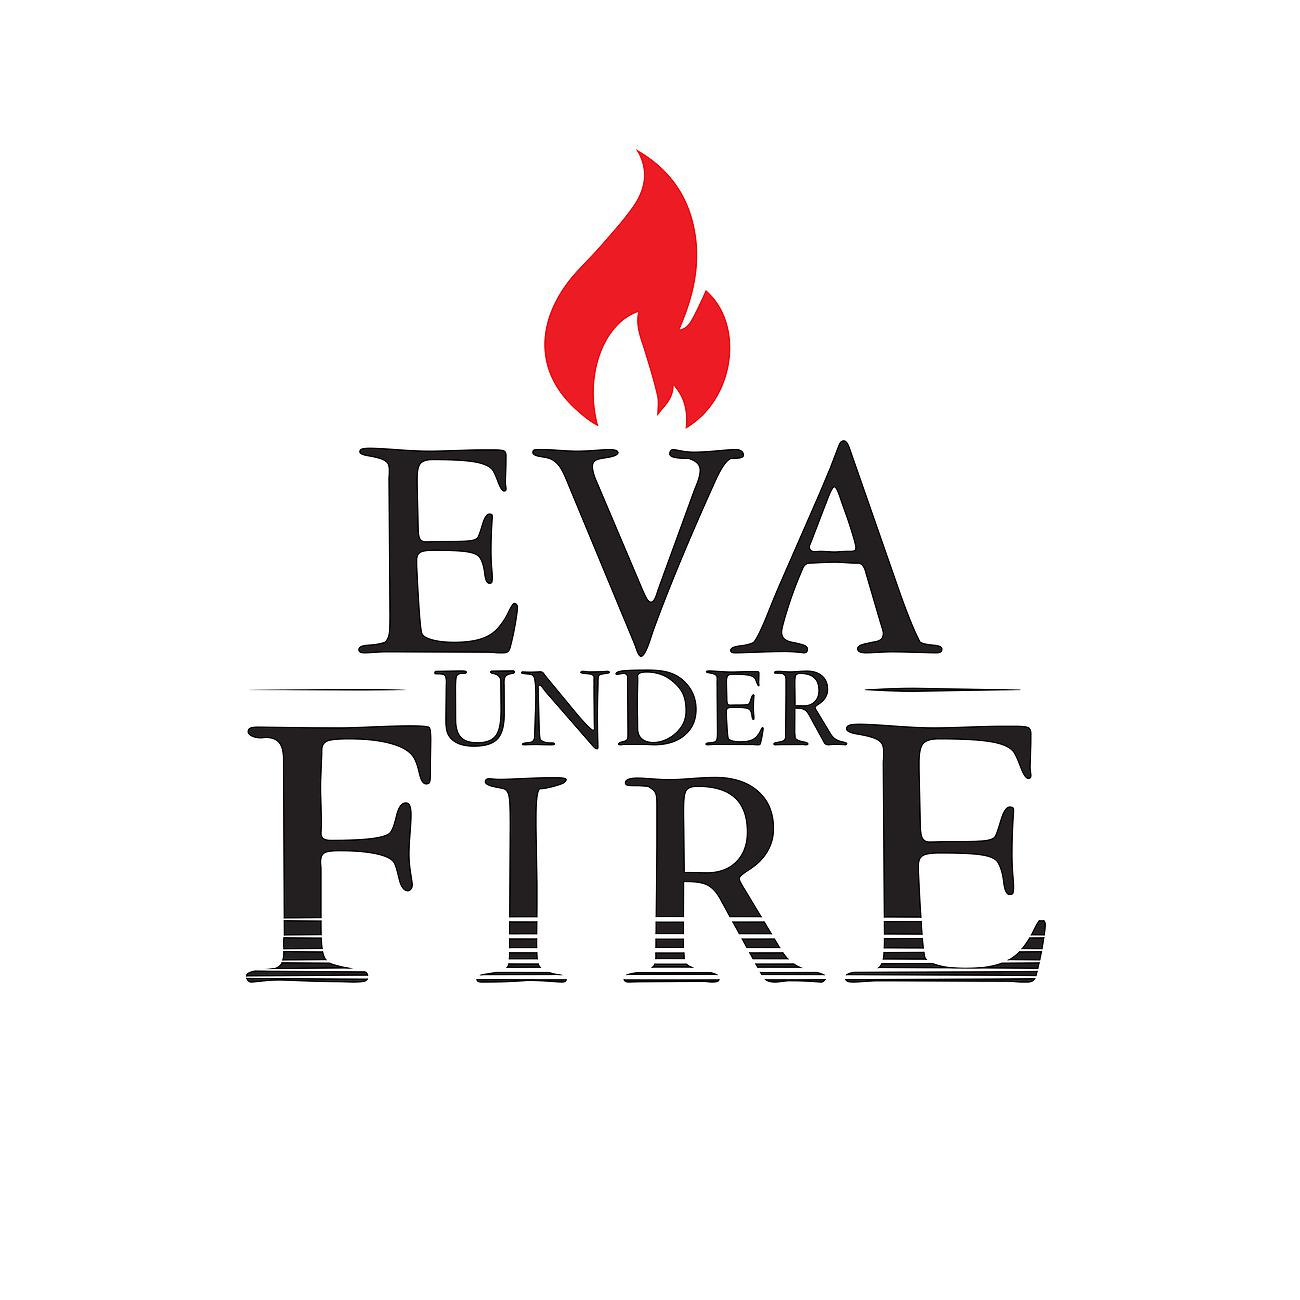 Эва форева. Eva under Fire. Eva under Fire группа. Eva under Fire logo. Until Forever · Eva under Fire.